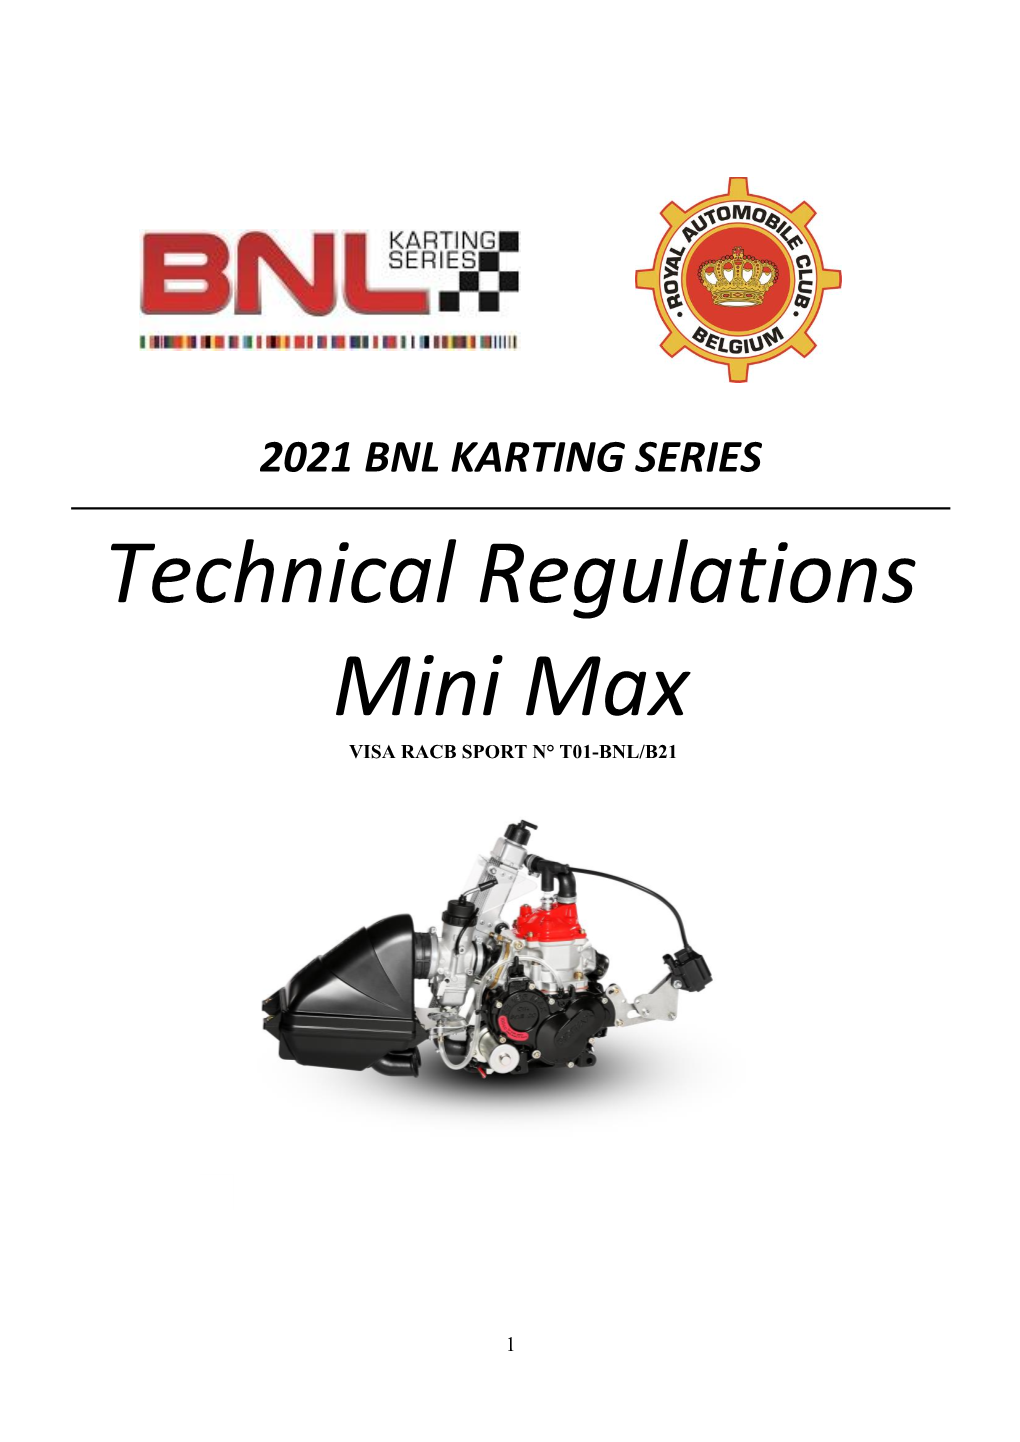 2021 BNL KARTING SERIES Technical Regulations Mini